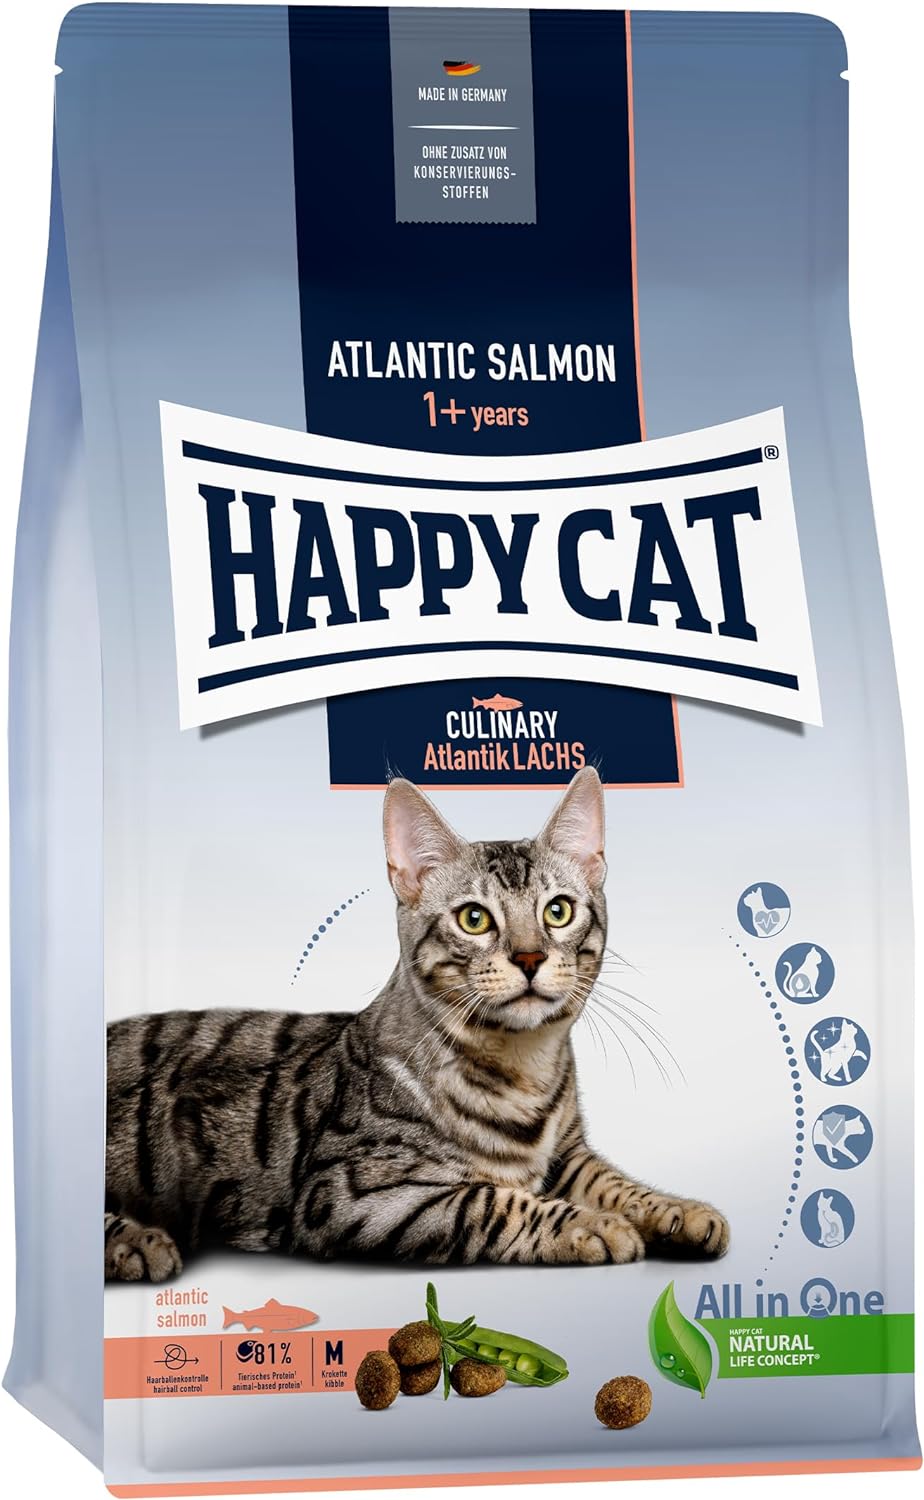 Happy Cat Culinary Atlantic Lachs Salmon 10 kg